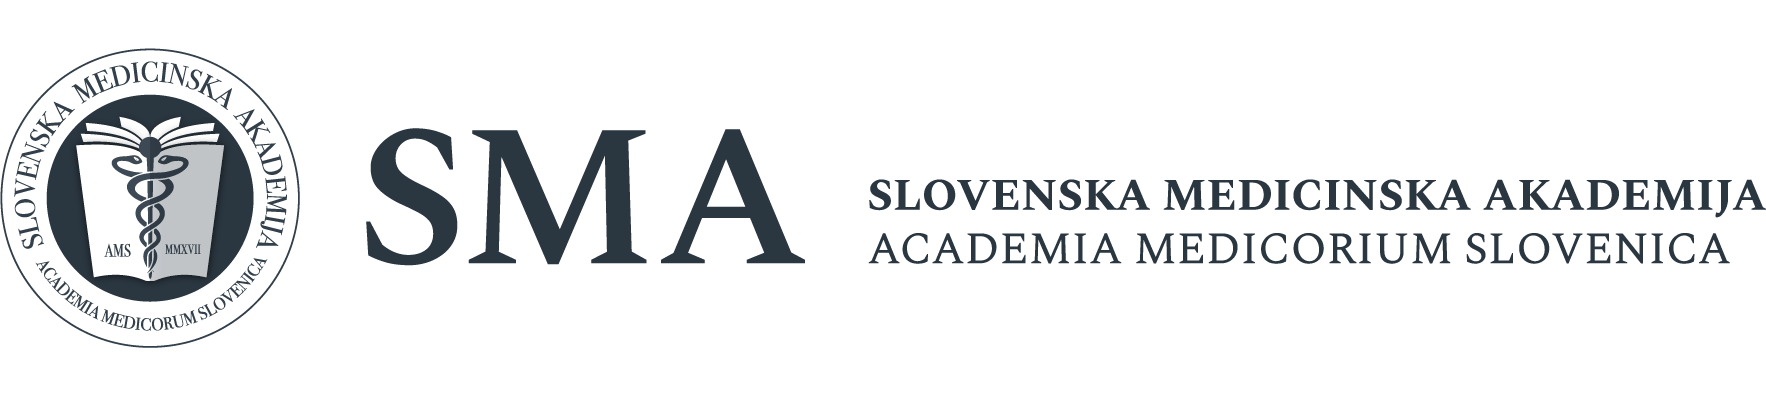 Slovenska medicinska akademija